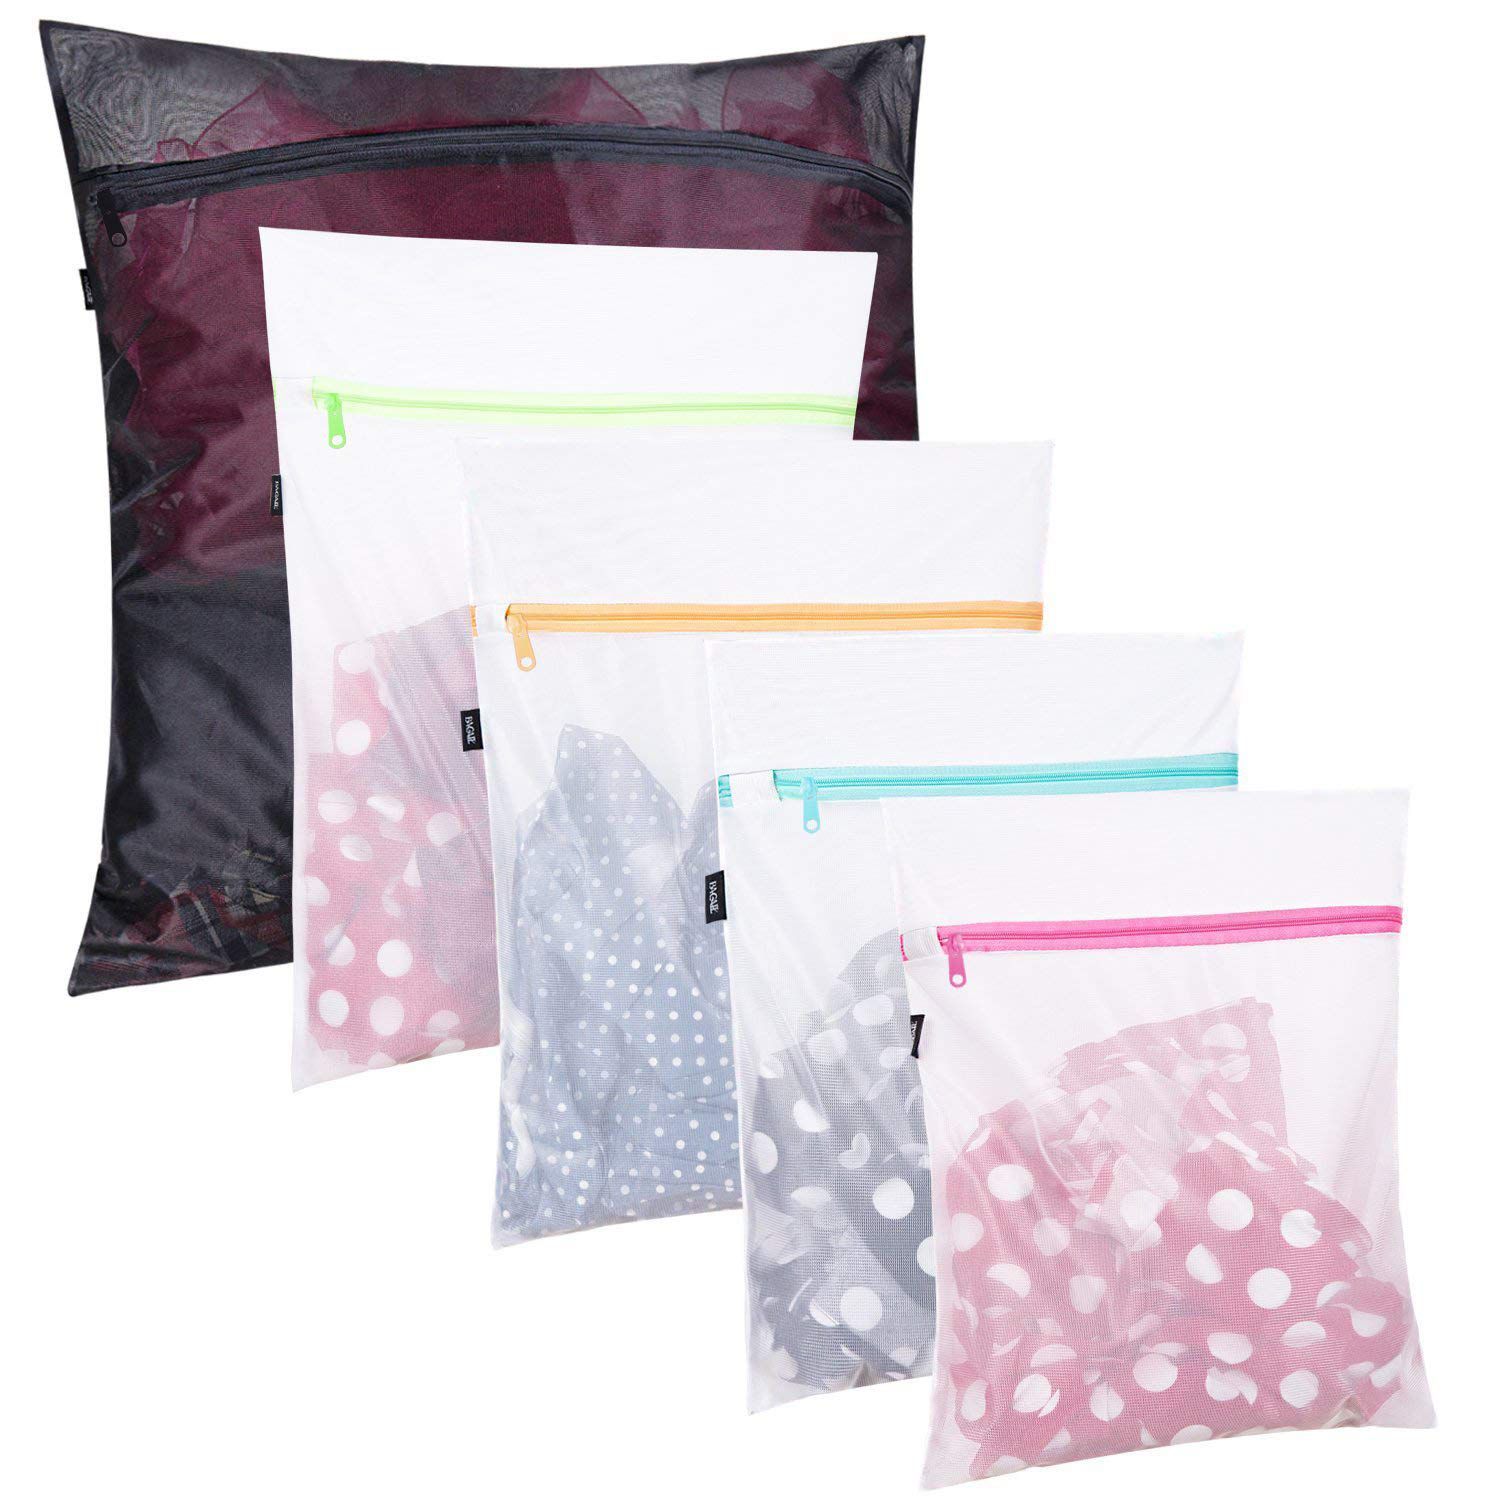 Mesh Laundry Bags 4Pcs Reusable Drawstring Laundry Washing Bag for Washing Machine Durable Laundry Net Washing Bag Bra/Lingerie/Socks/Tights/Stockings/Baby Clothes-White